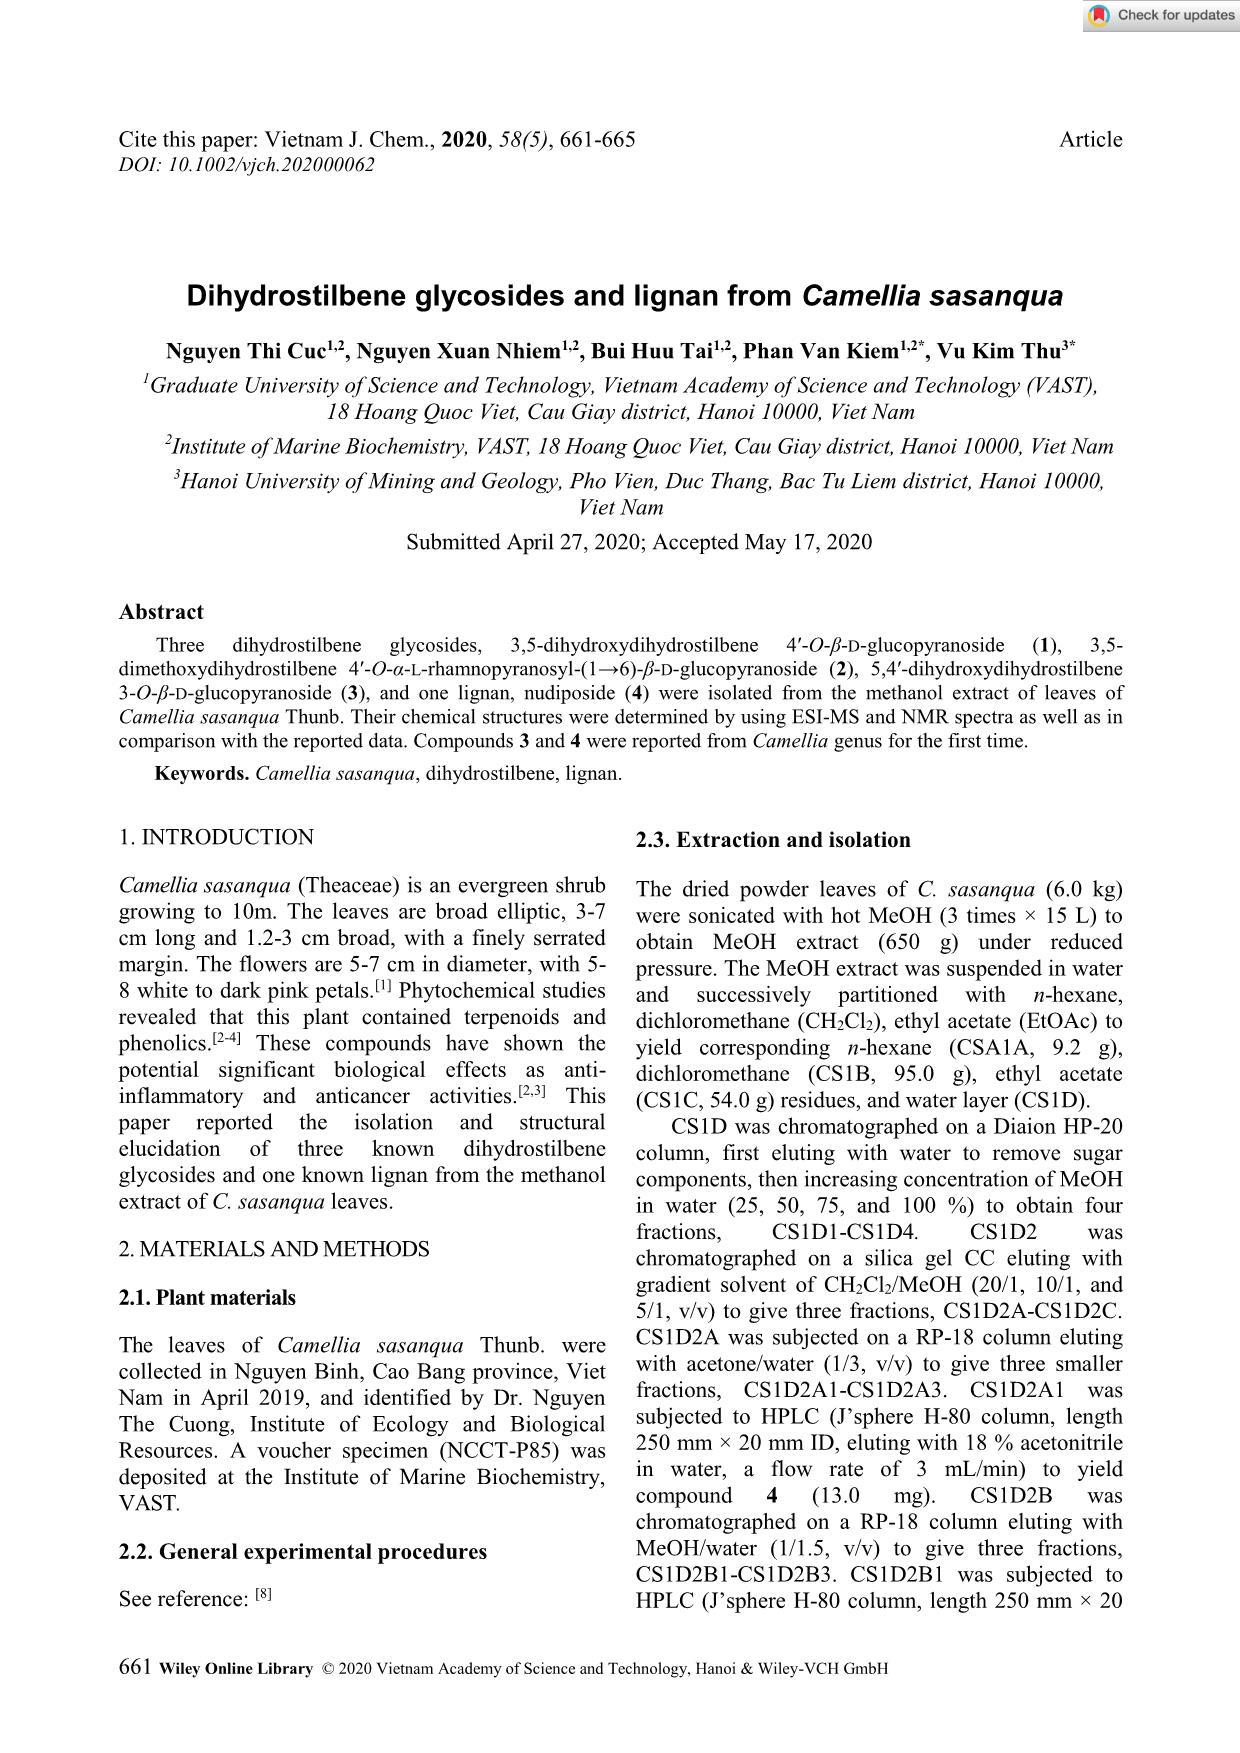 Dihydrostilbene glycosides and lignan from Camellia sasanqua trang 1